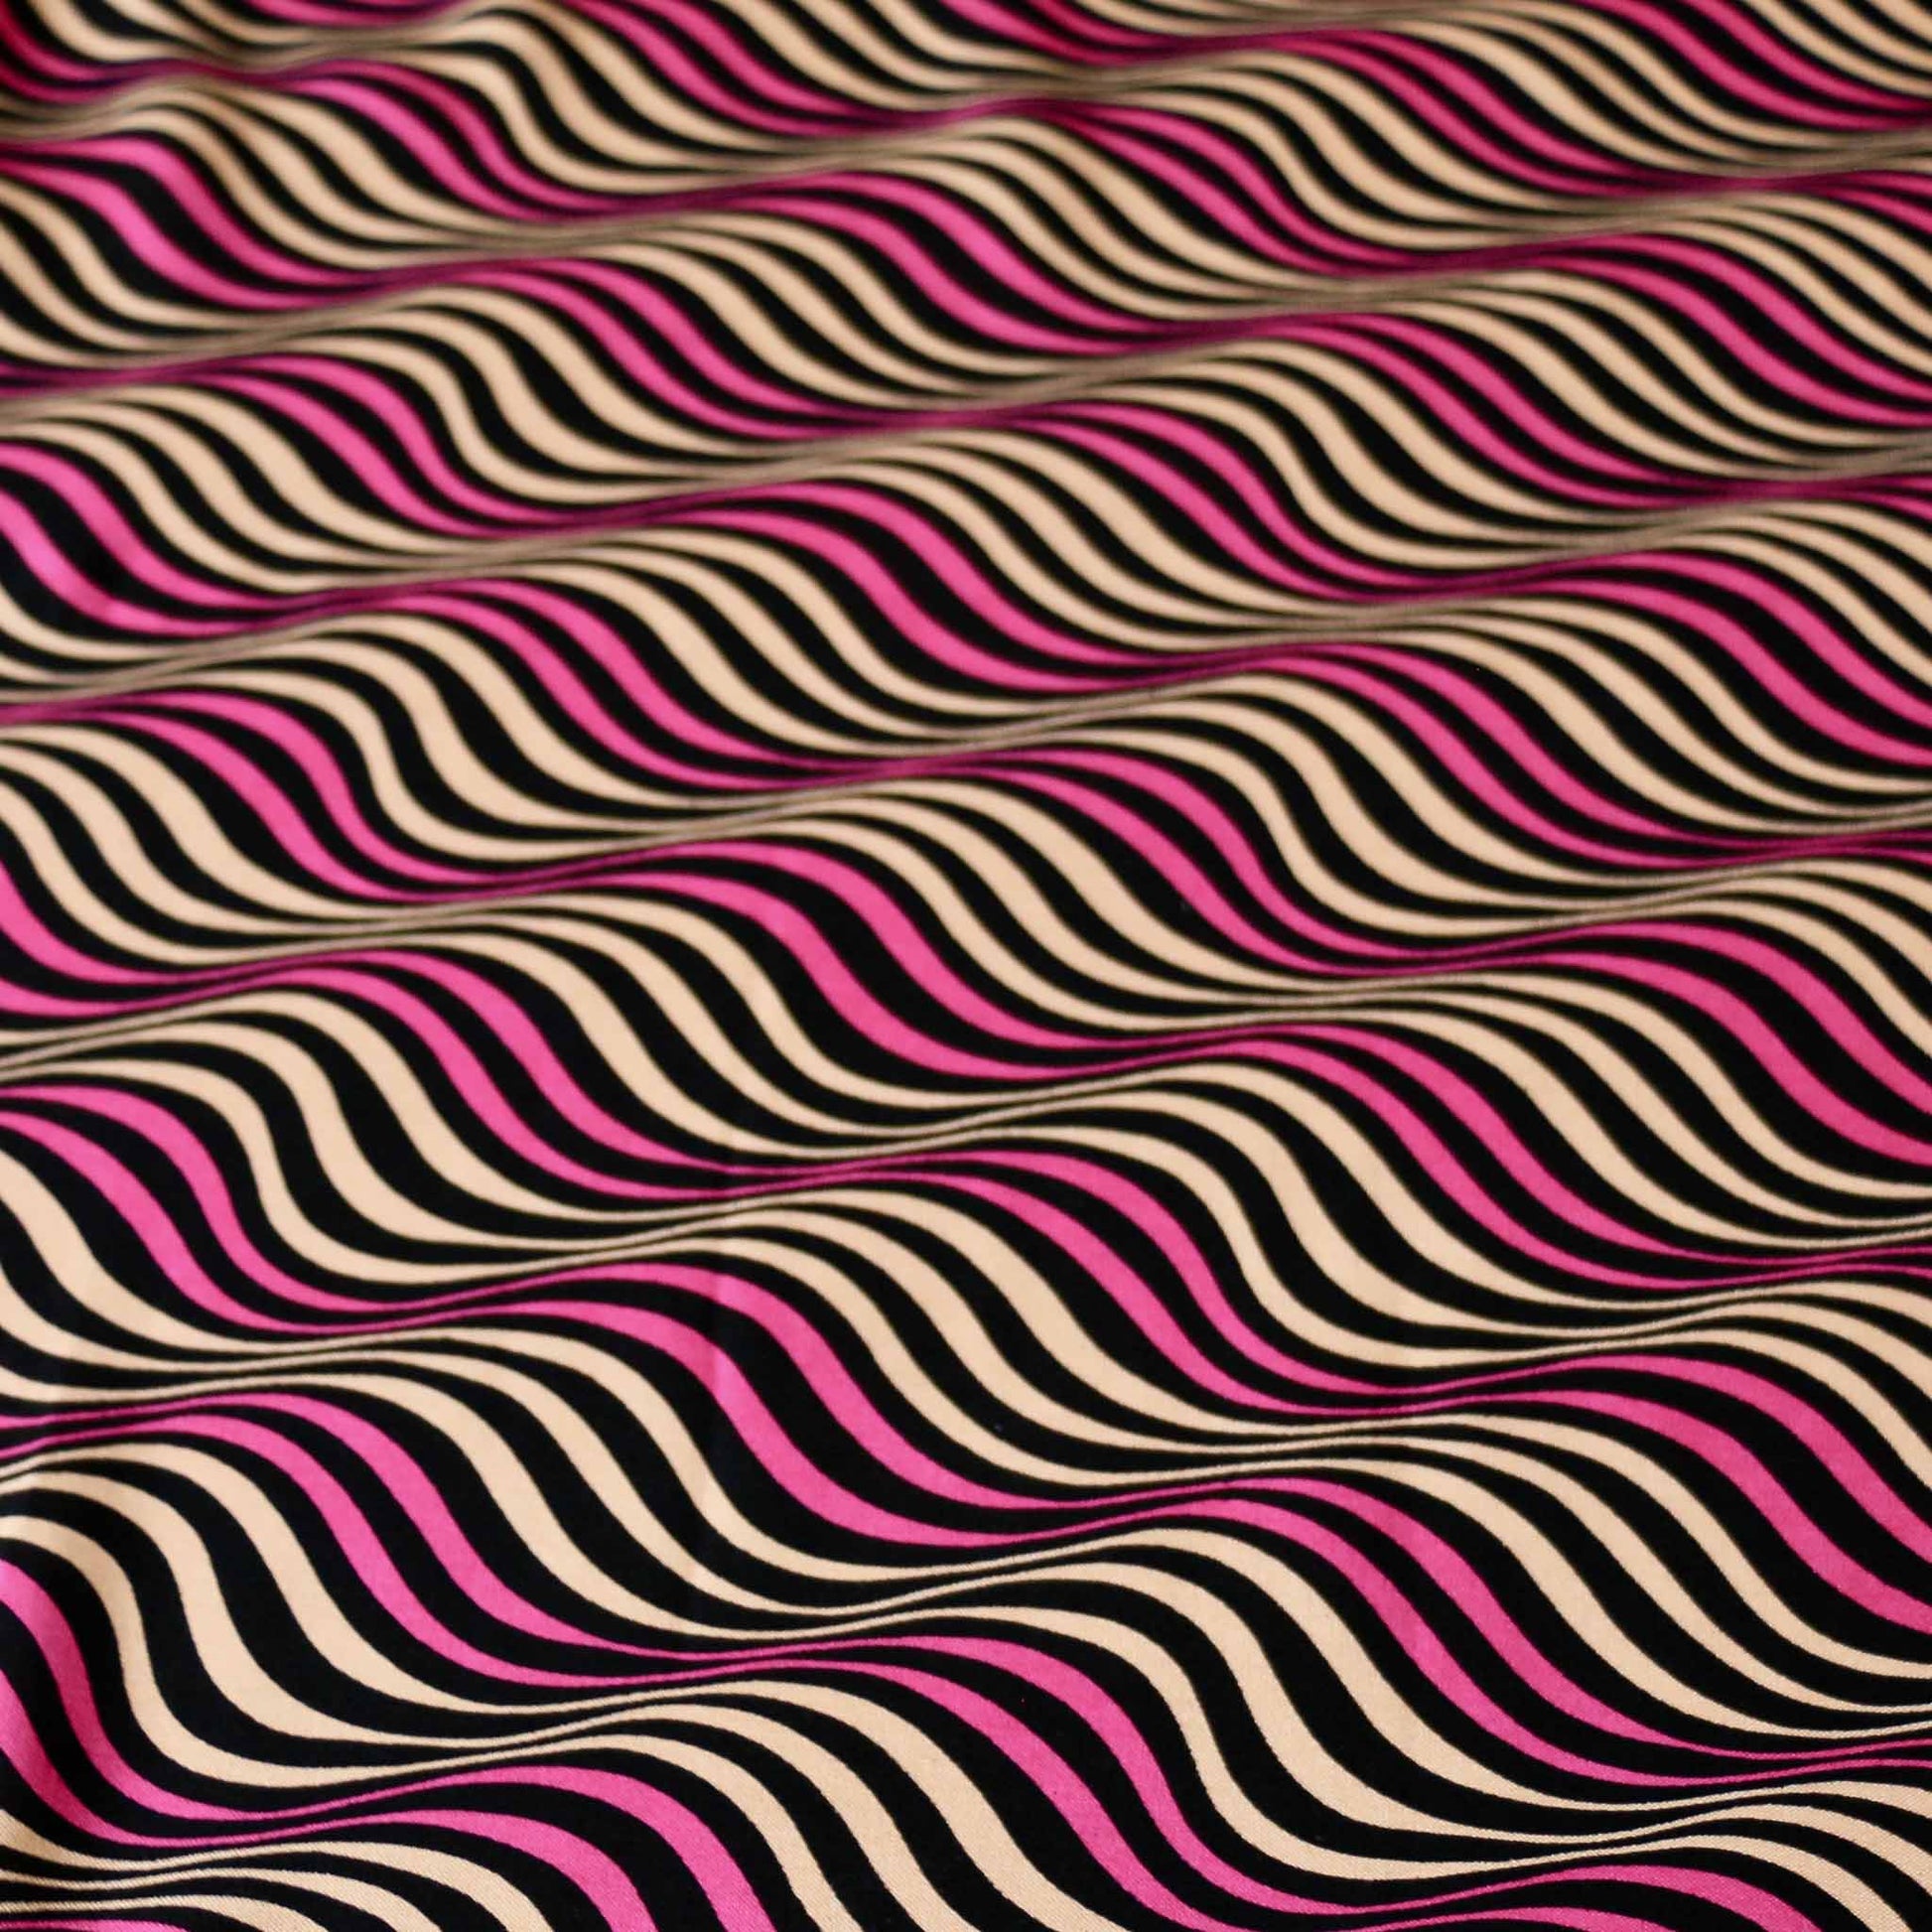 purple beige and black geometric wave pattern on viscose challis dressmaking rayon fabric